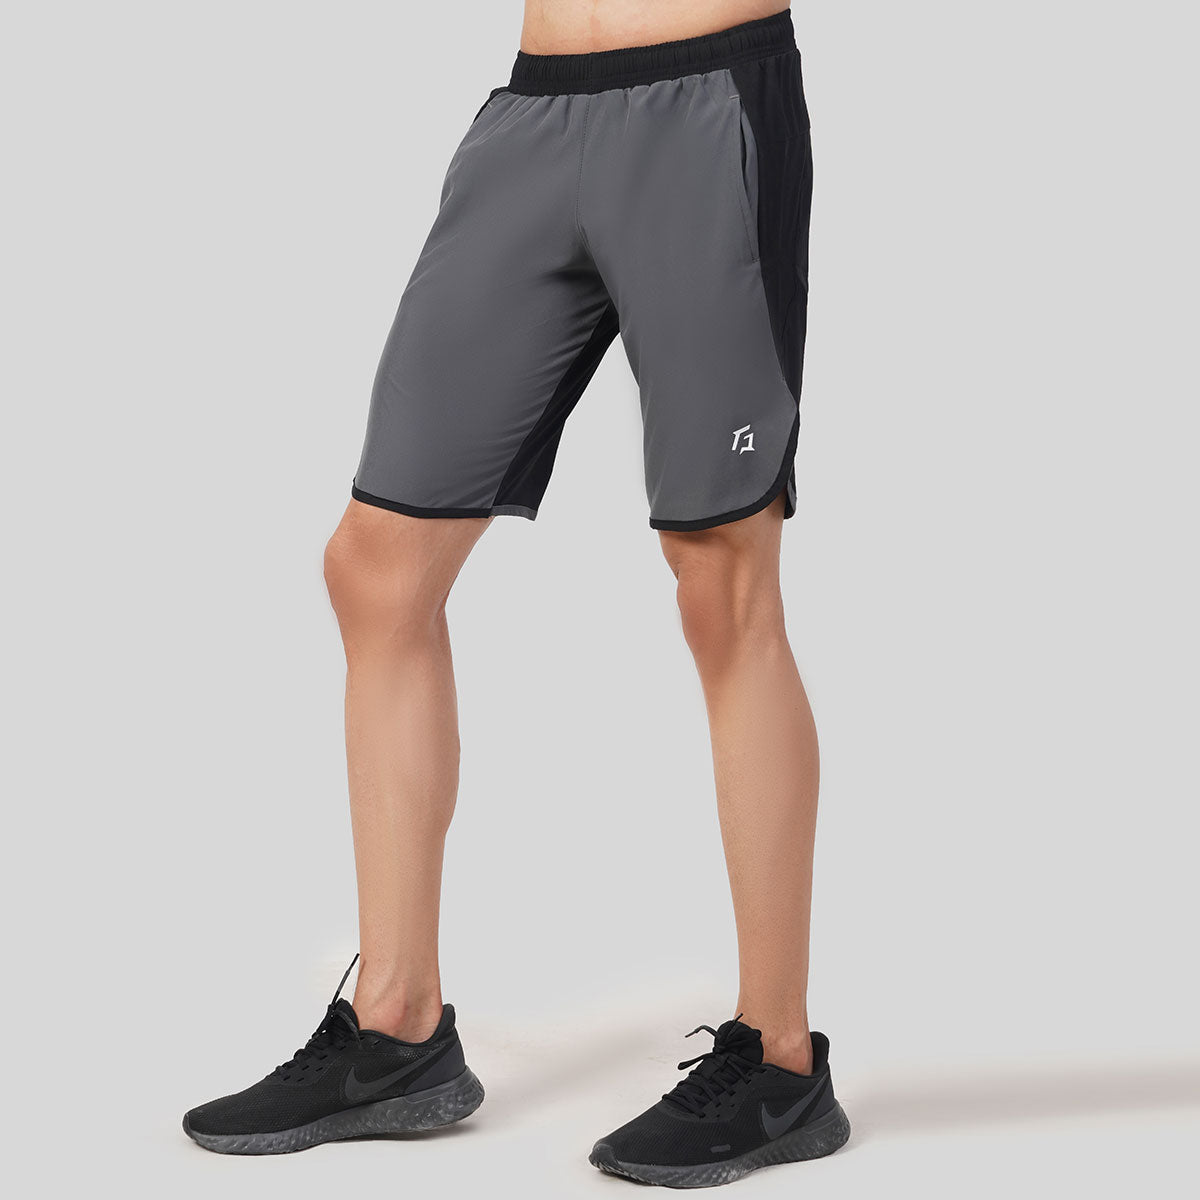 Transverse Shorts (Grey-Black)